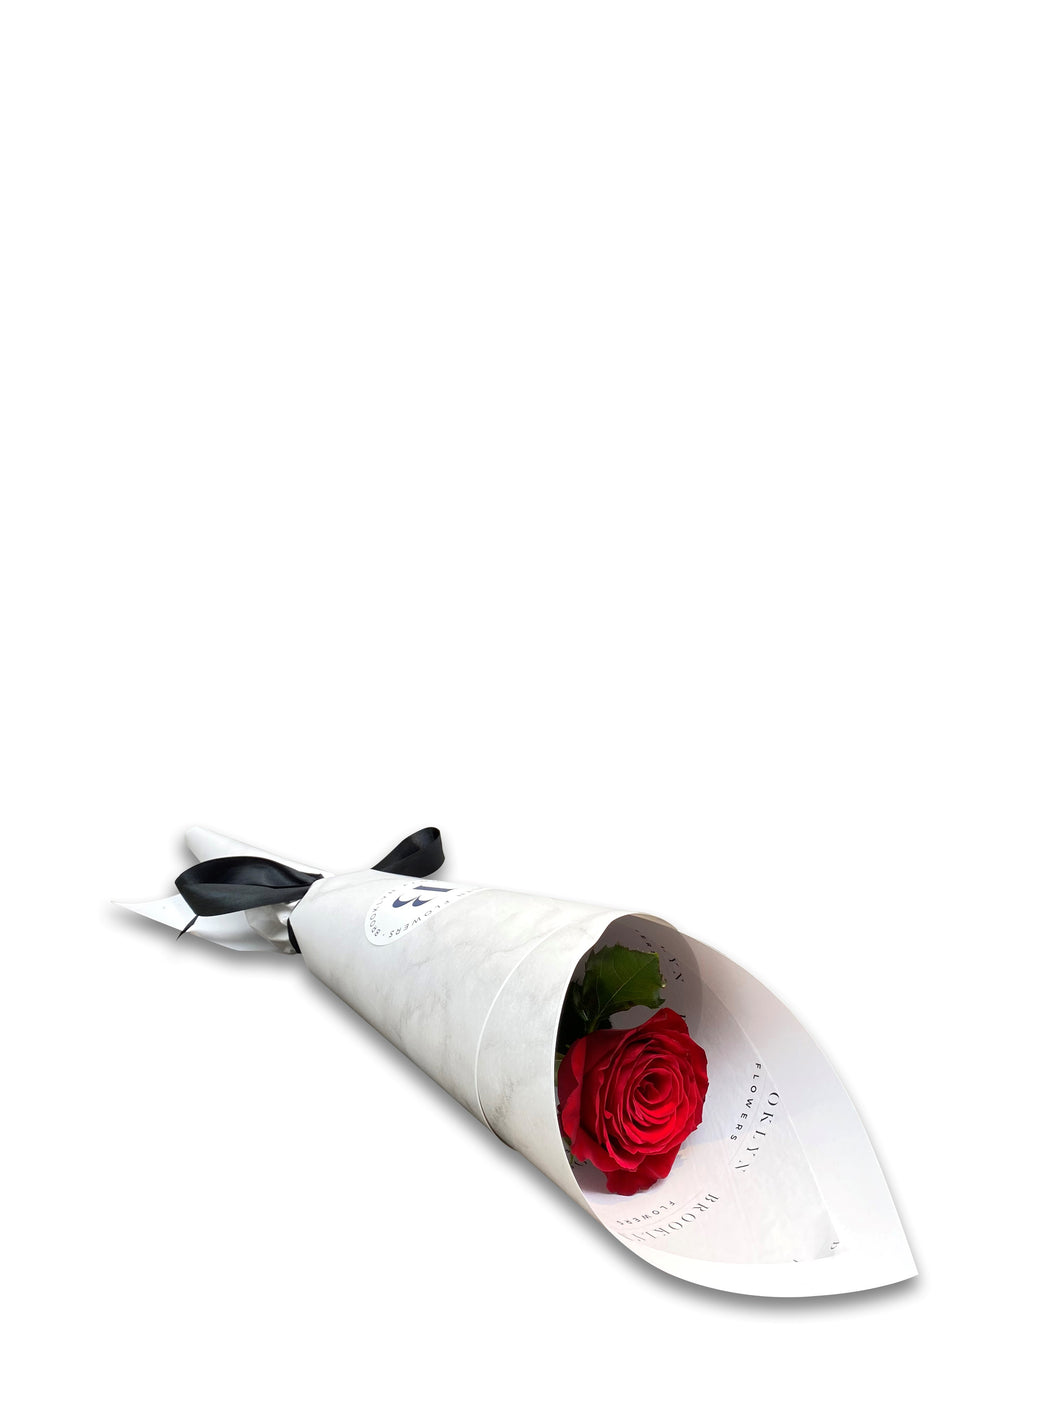 Single Stem Wrapped Rose - Brooklyn Flowers